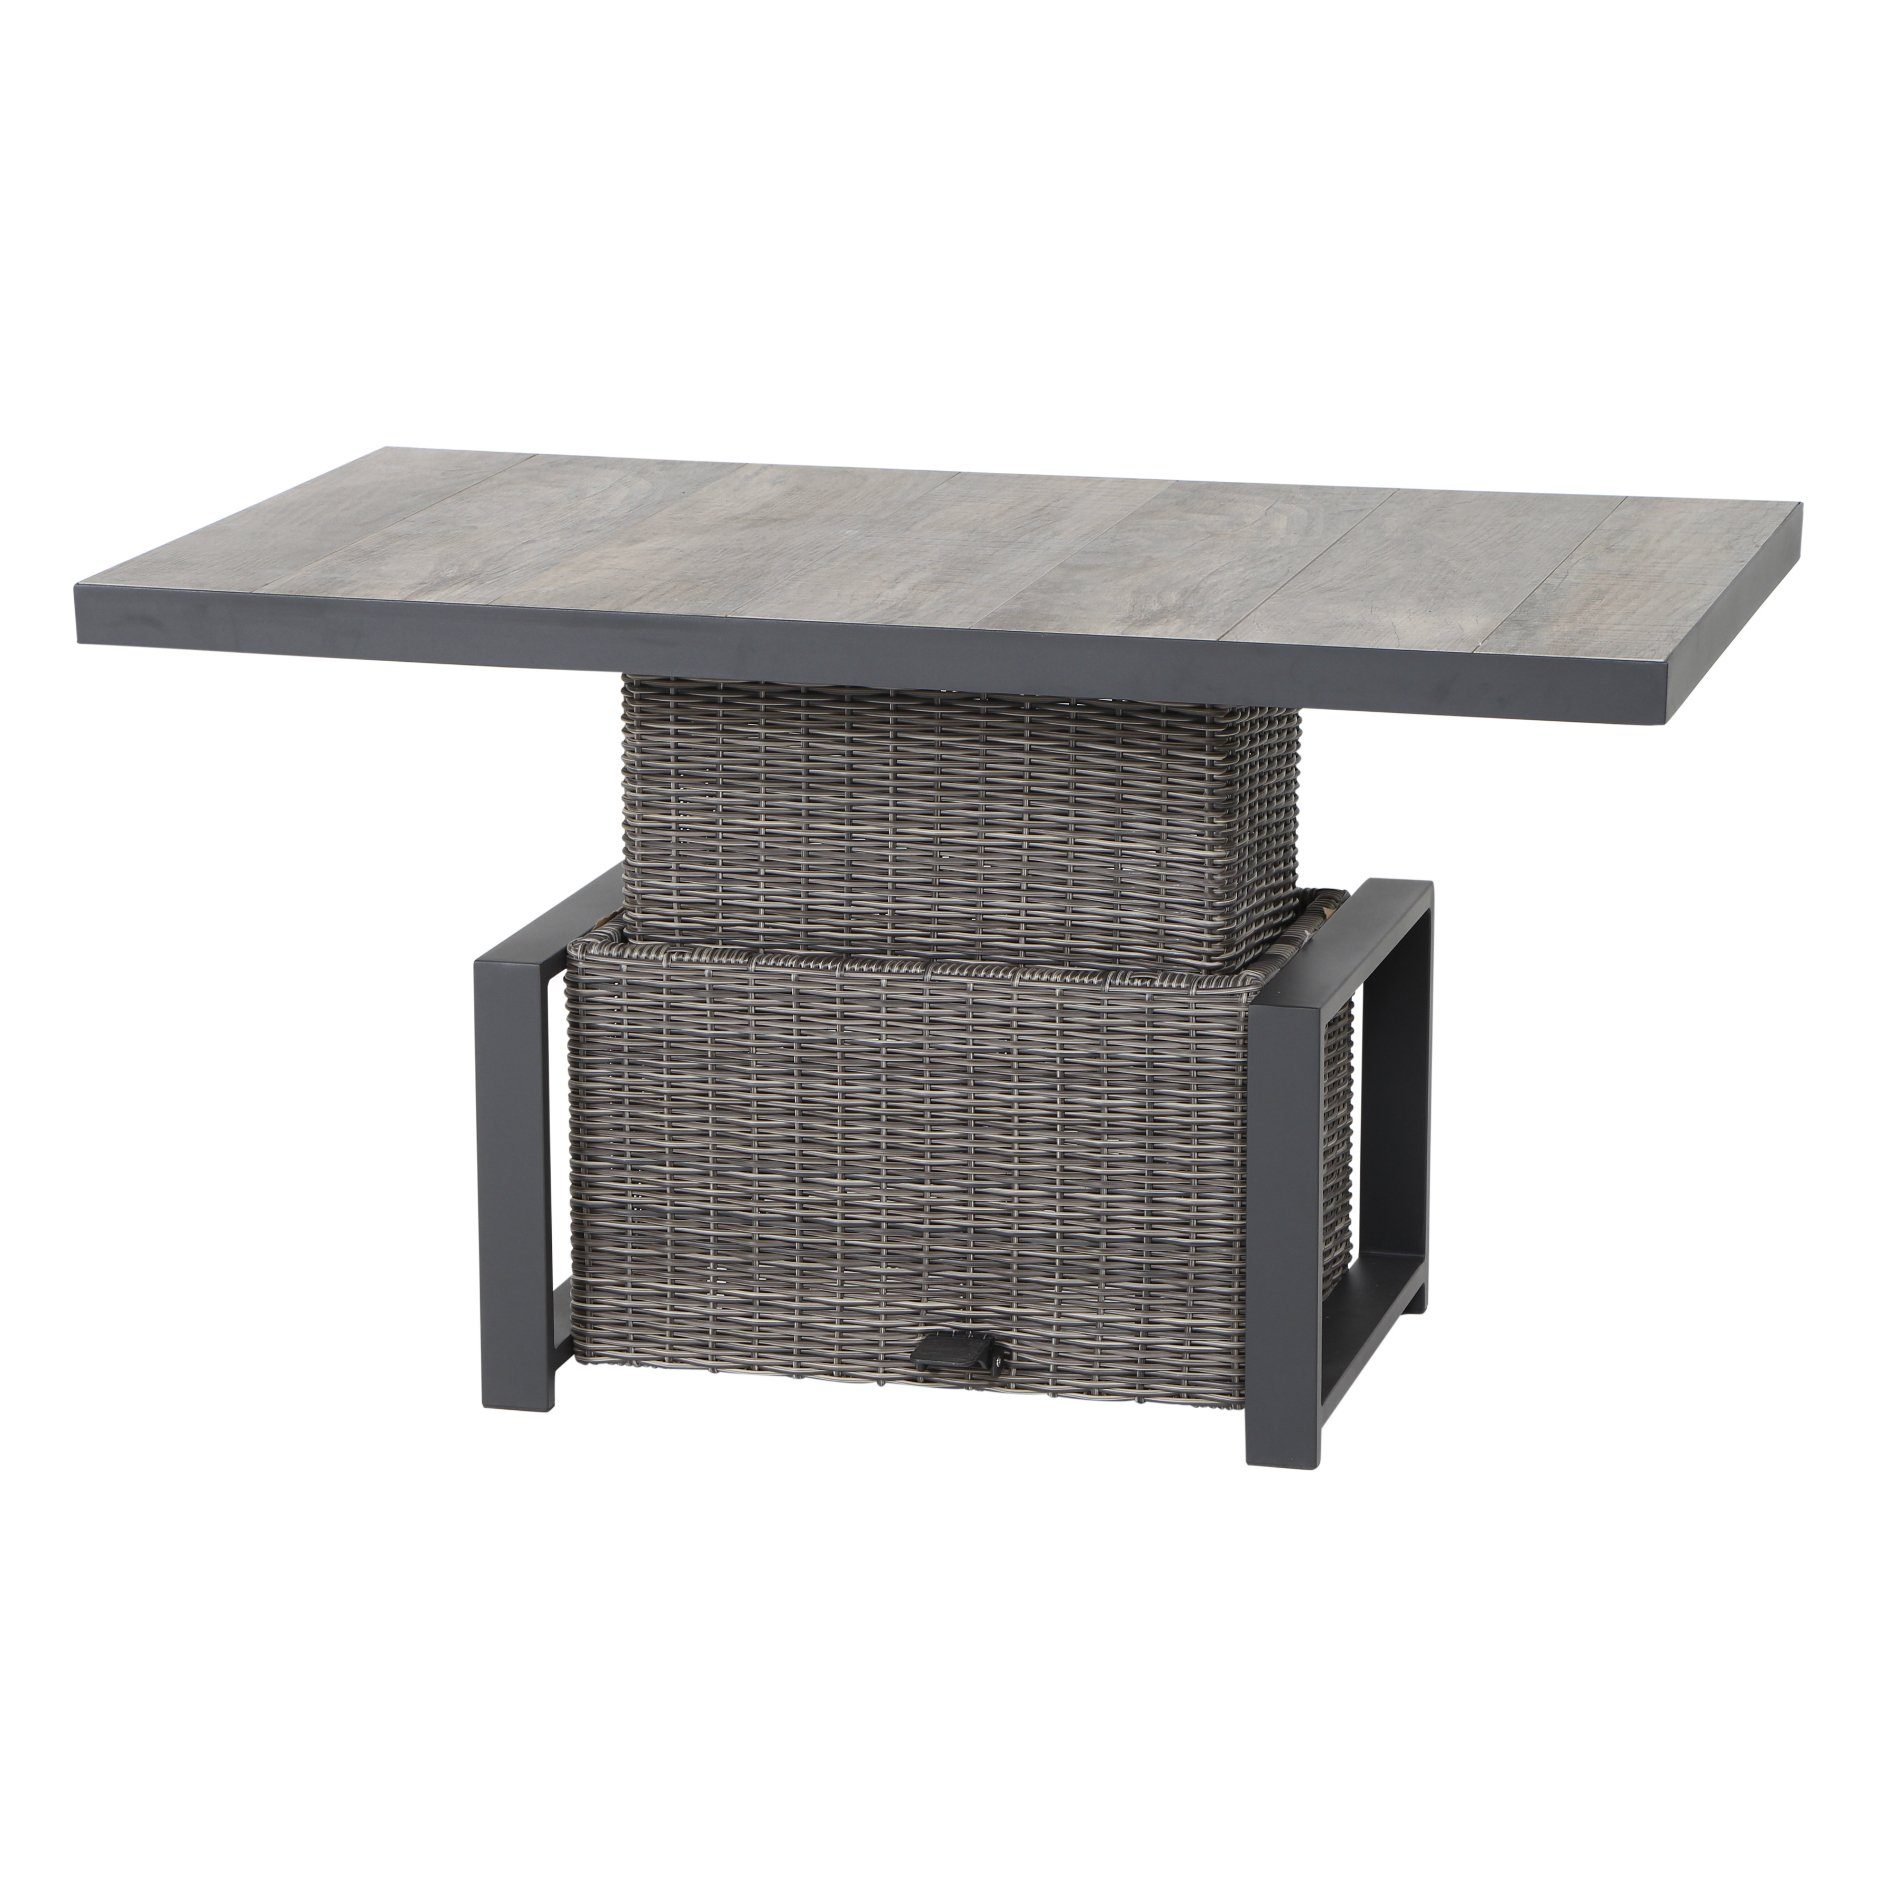 Siena Garden "Corido" Loungetisch/Lift-Tisch, Gestell Aluminium anthrazit matt, Geflecht charcoal grey, Tischplatte Keramik washed grey